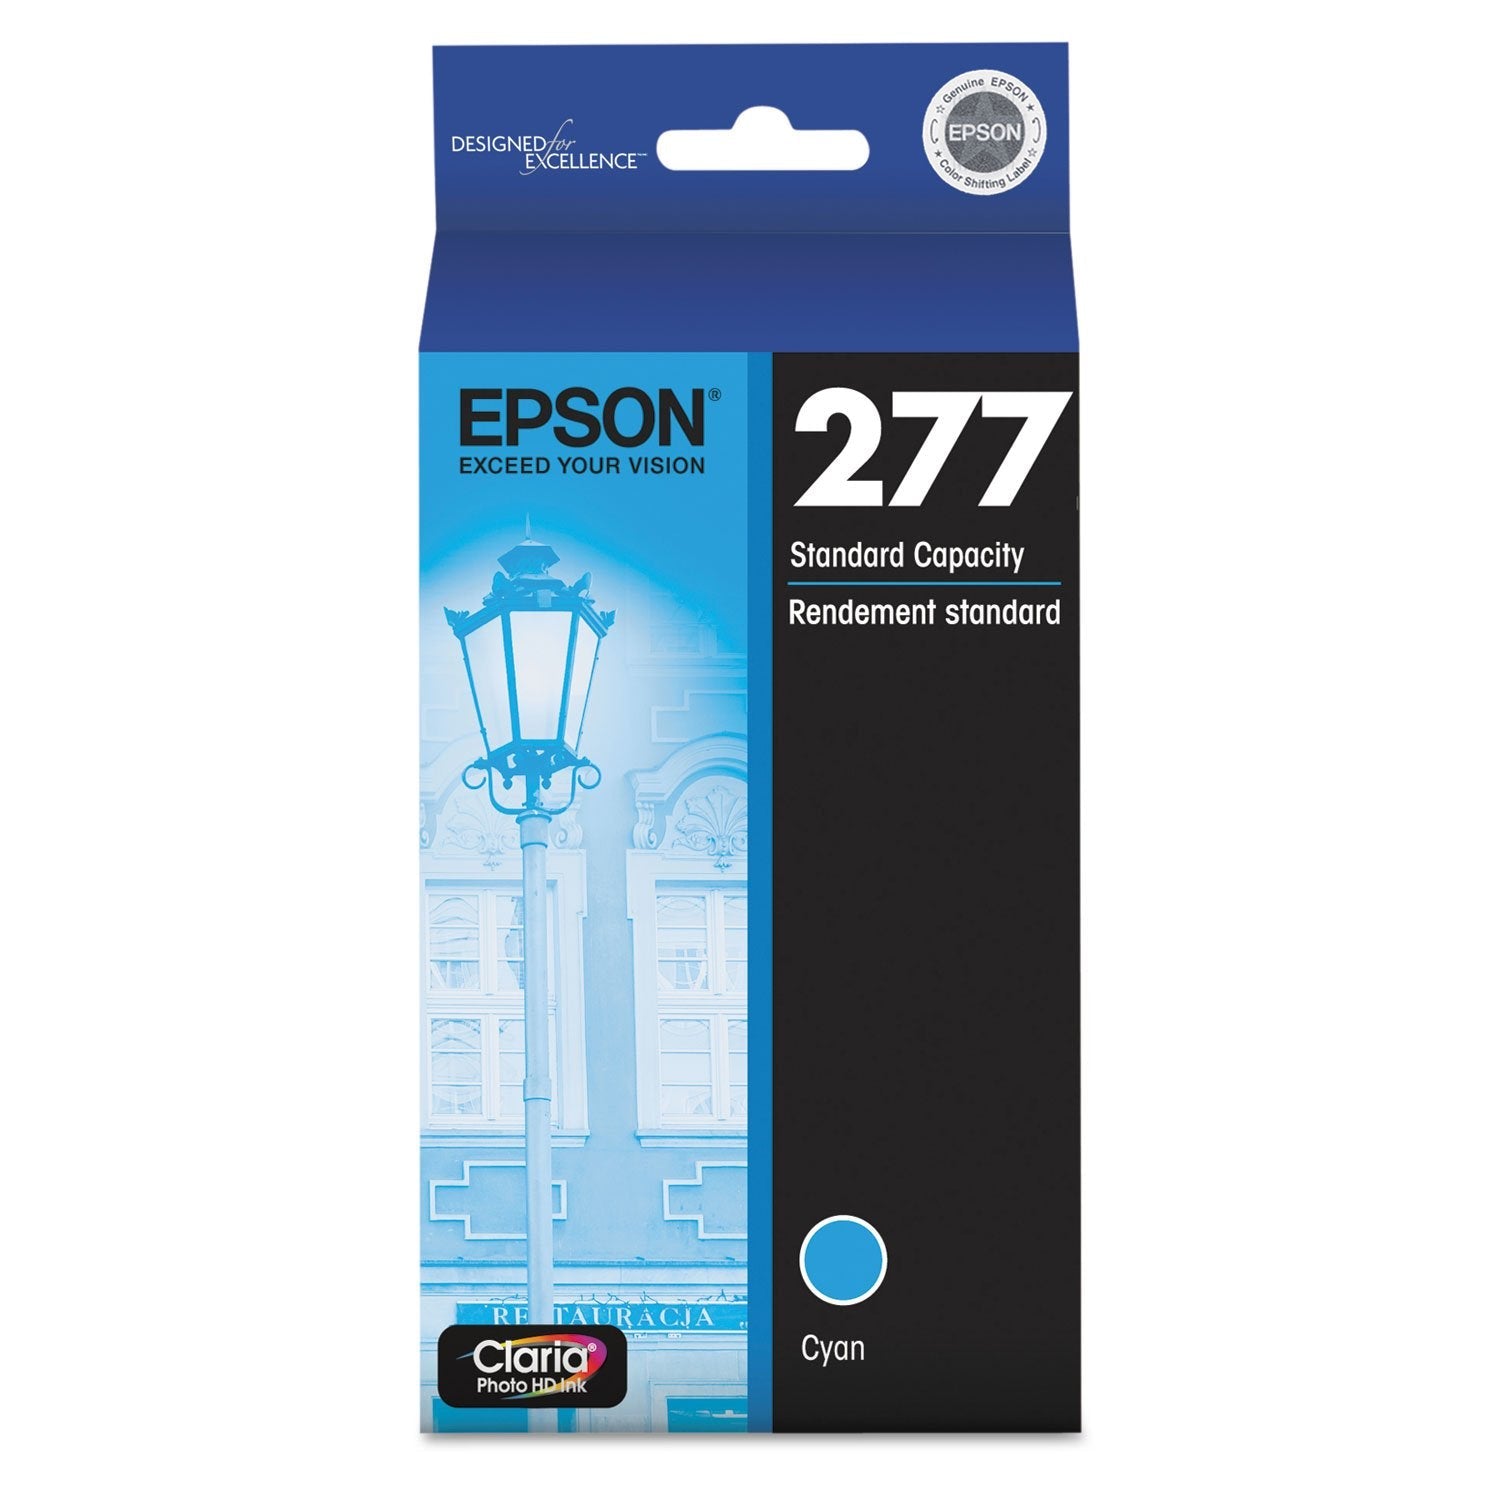 Absolute Toner Epson 277 Original Genuine OEM Light Cyan Ink Cartridge | T277520S Original Epson Cartridge